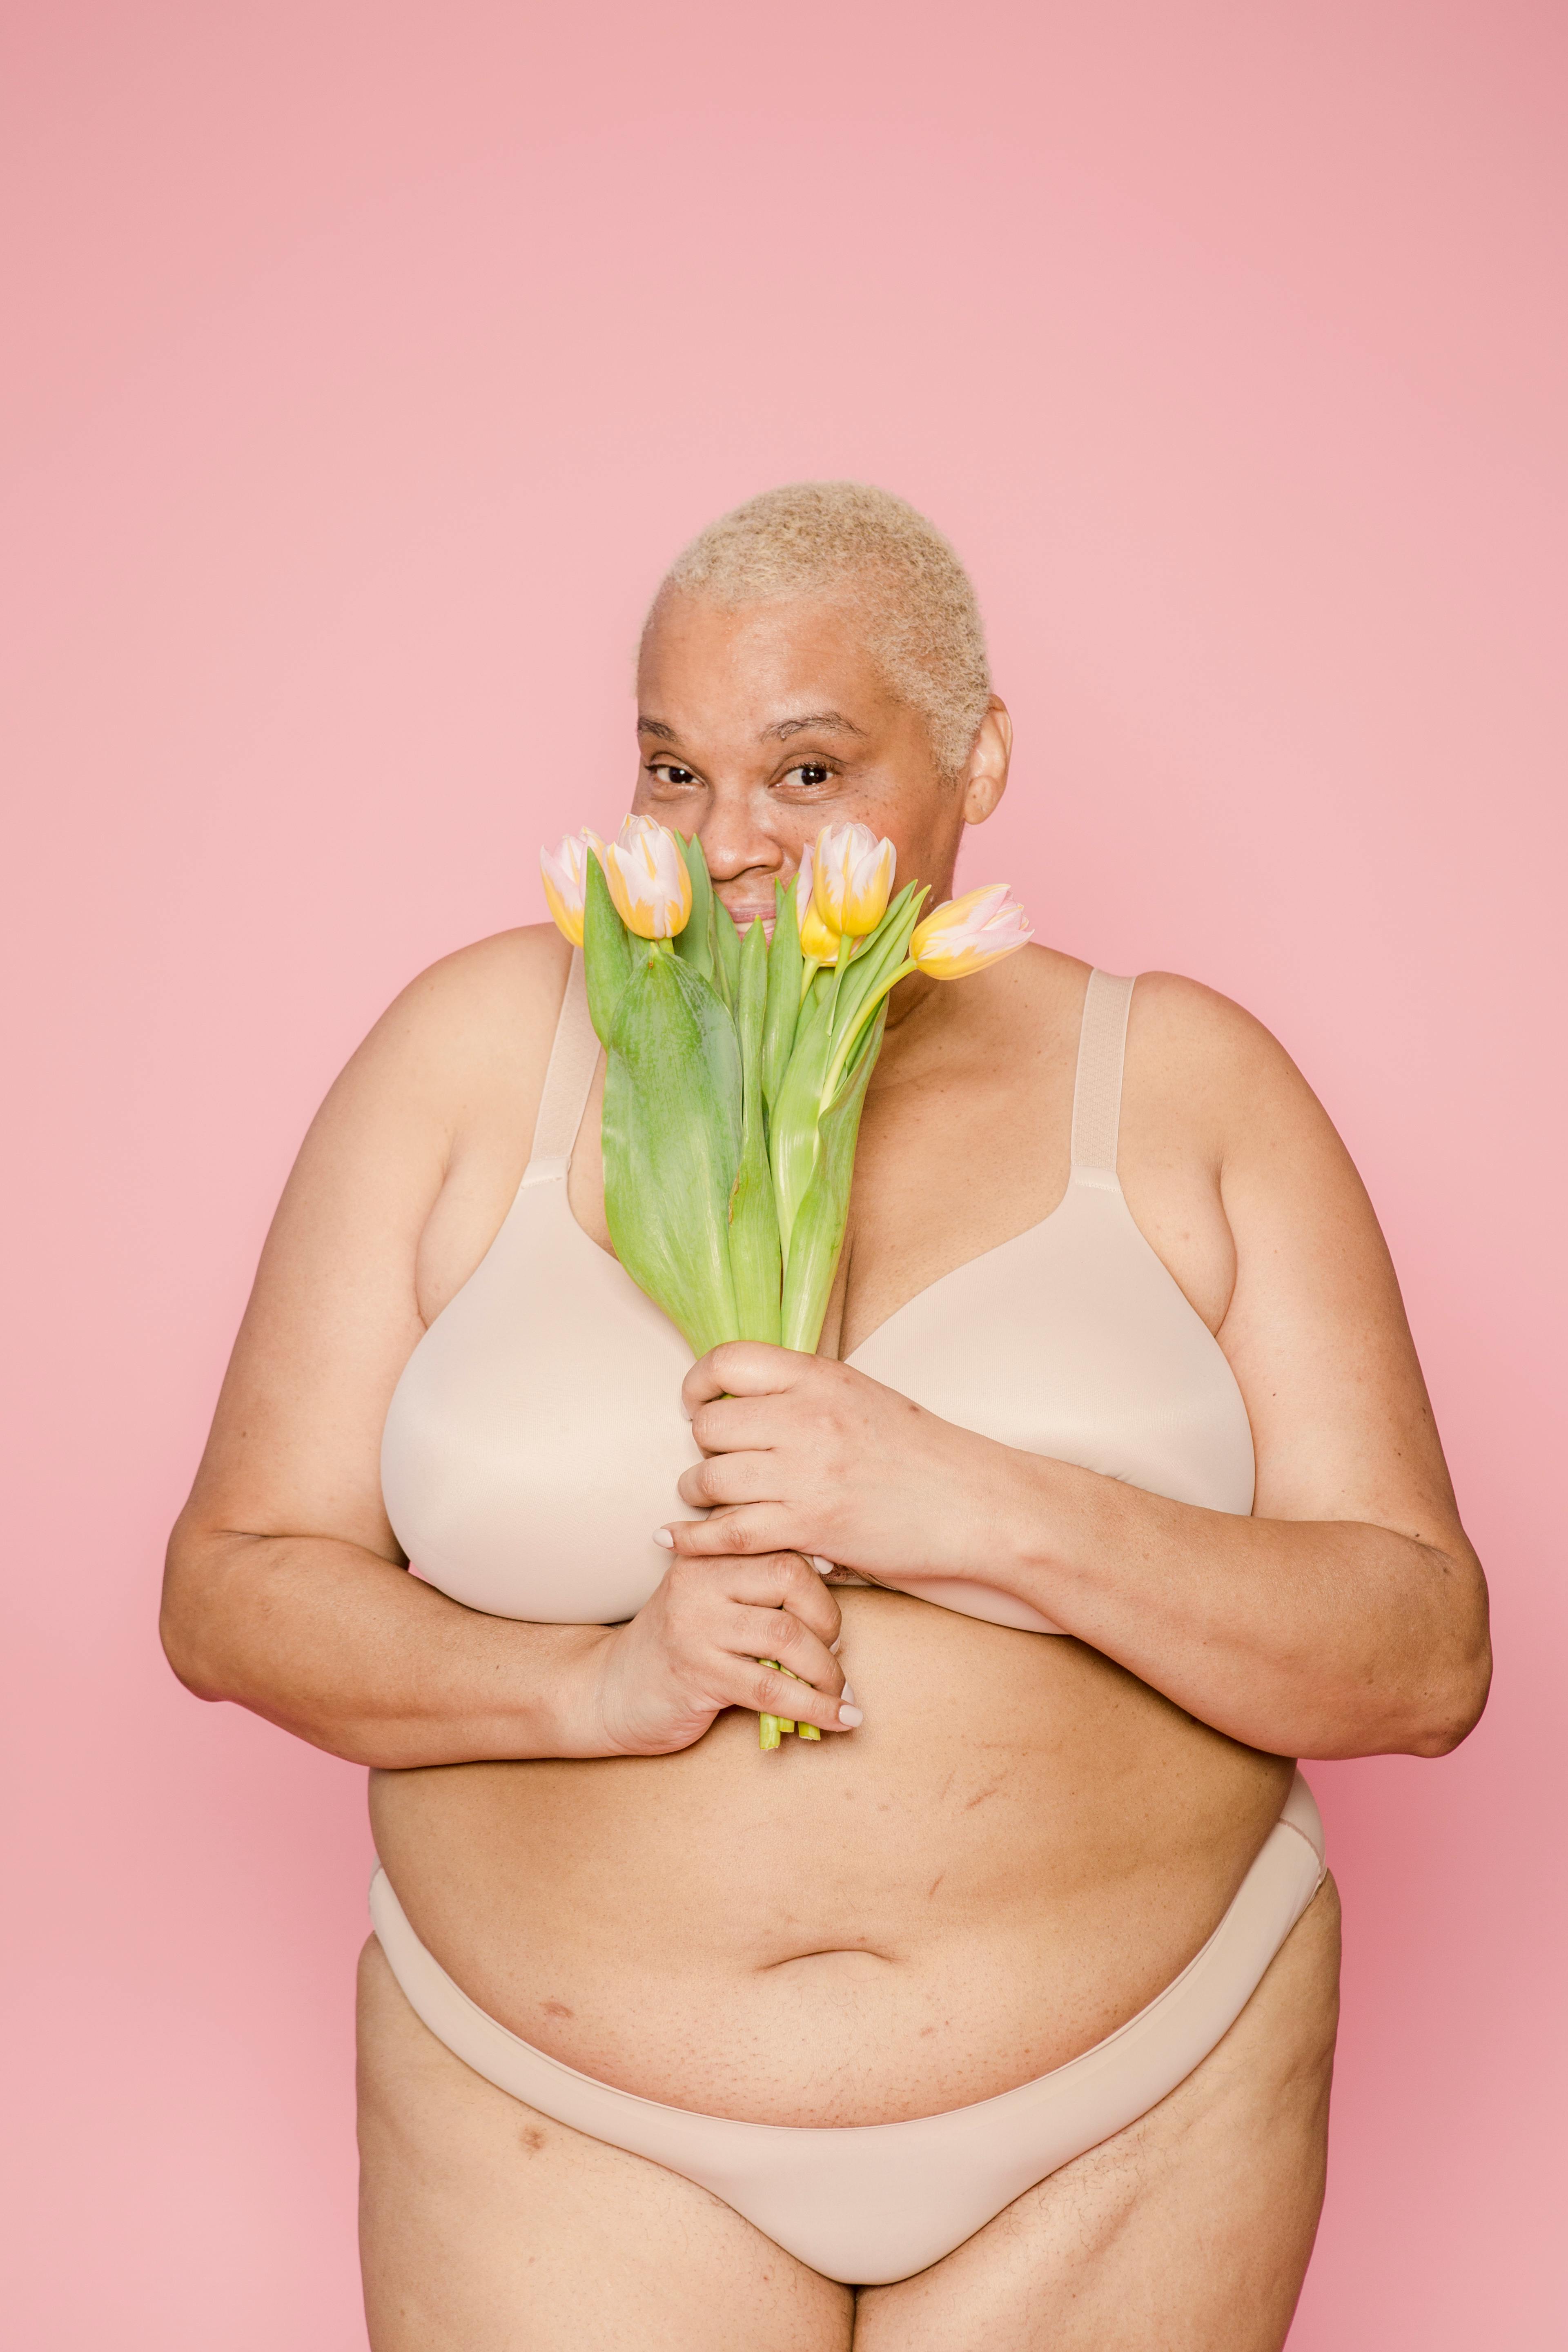 Black overweight woman in tight underwear sitting in studio · Free